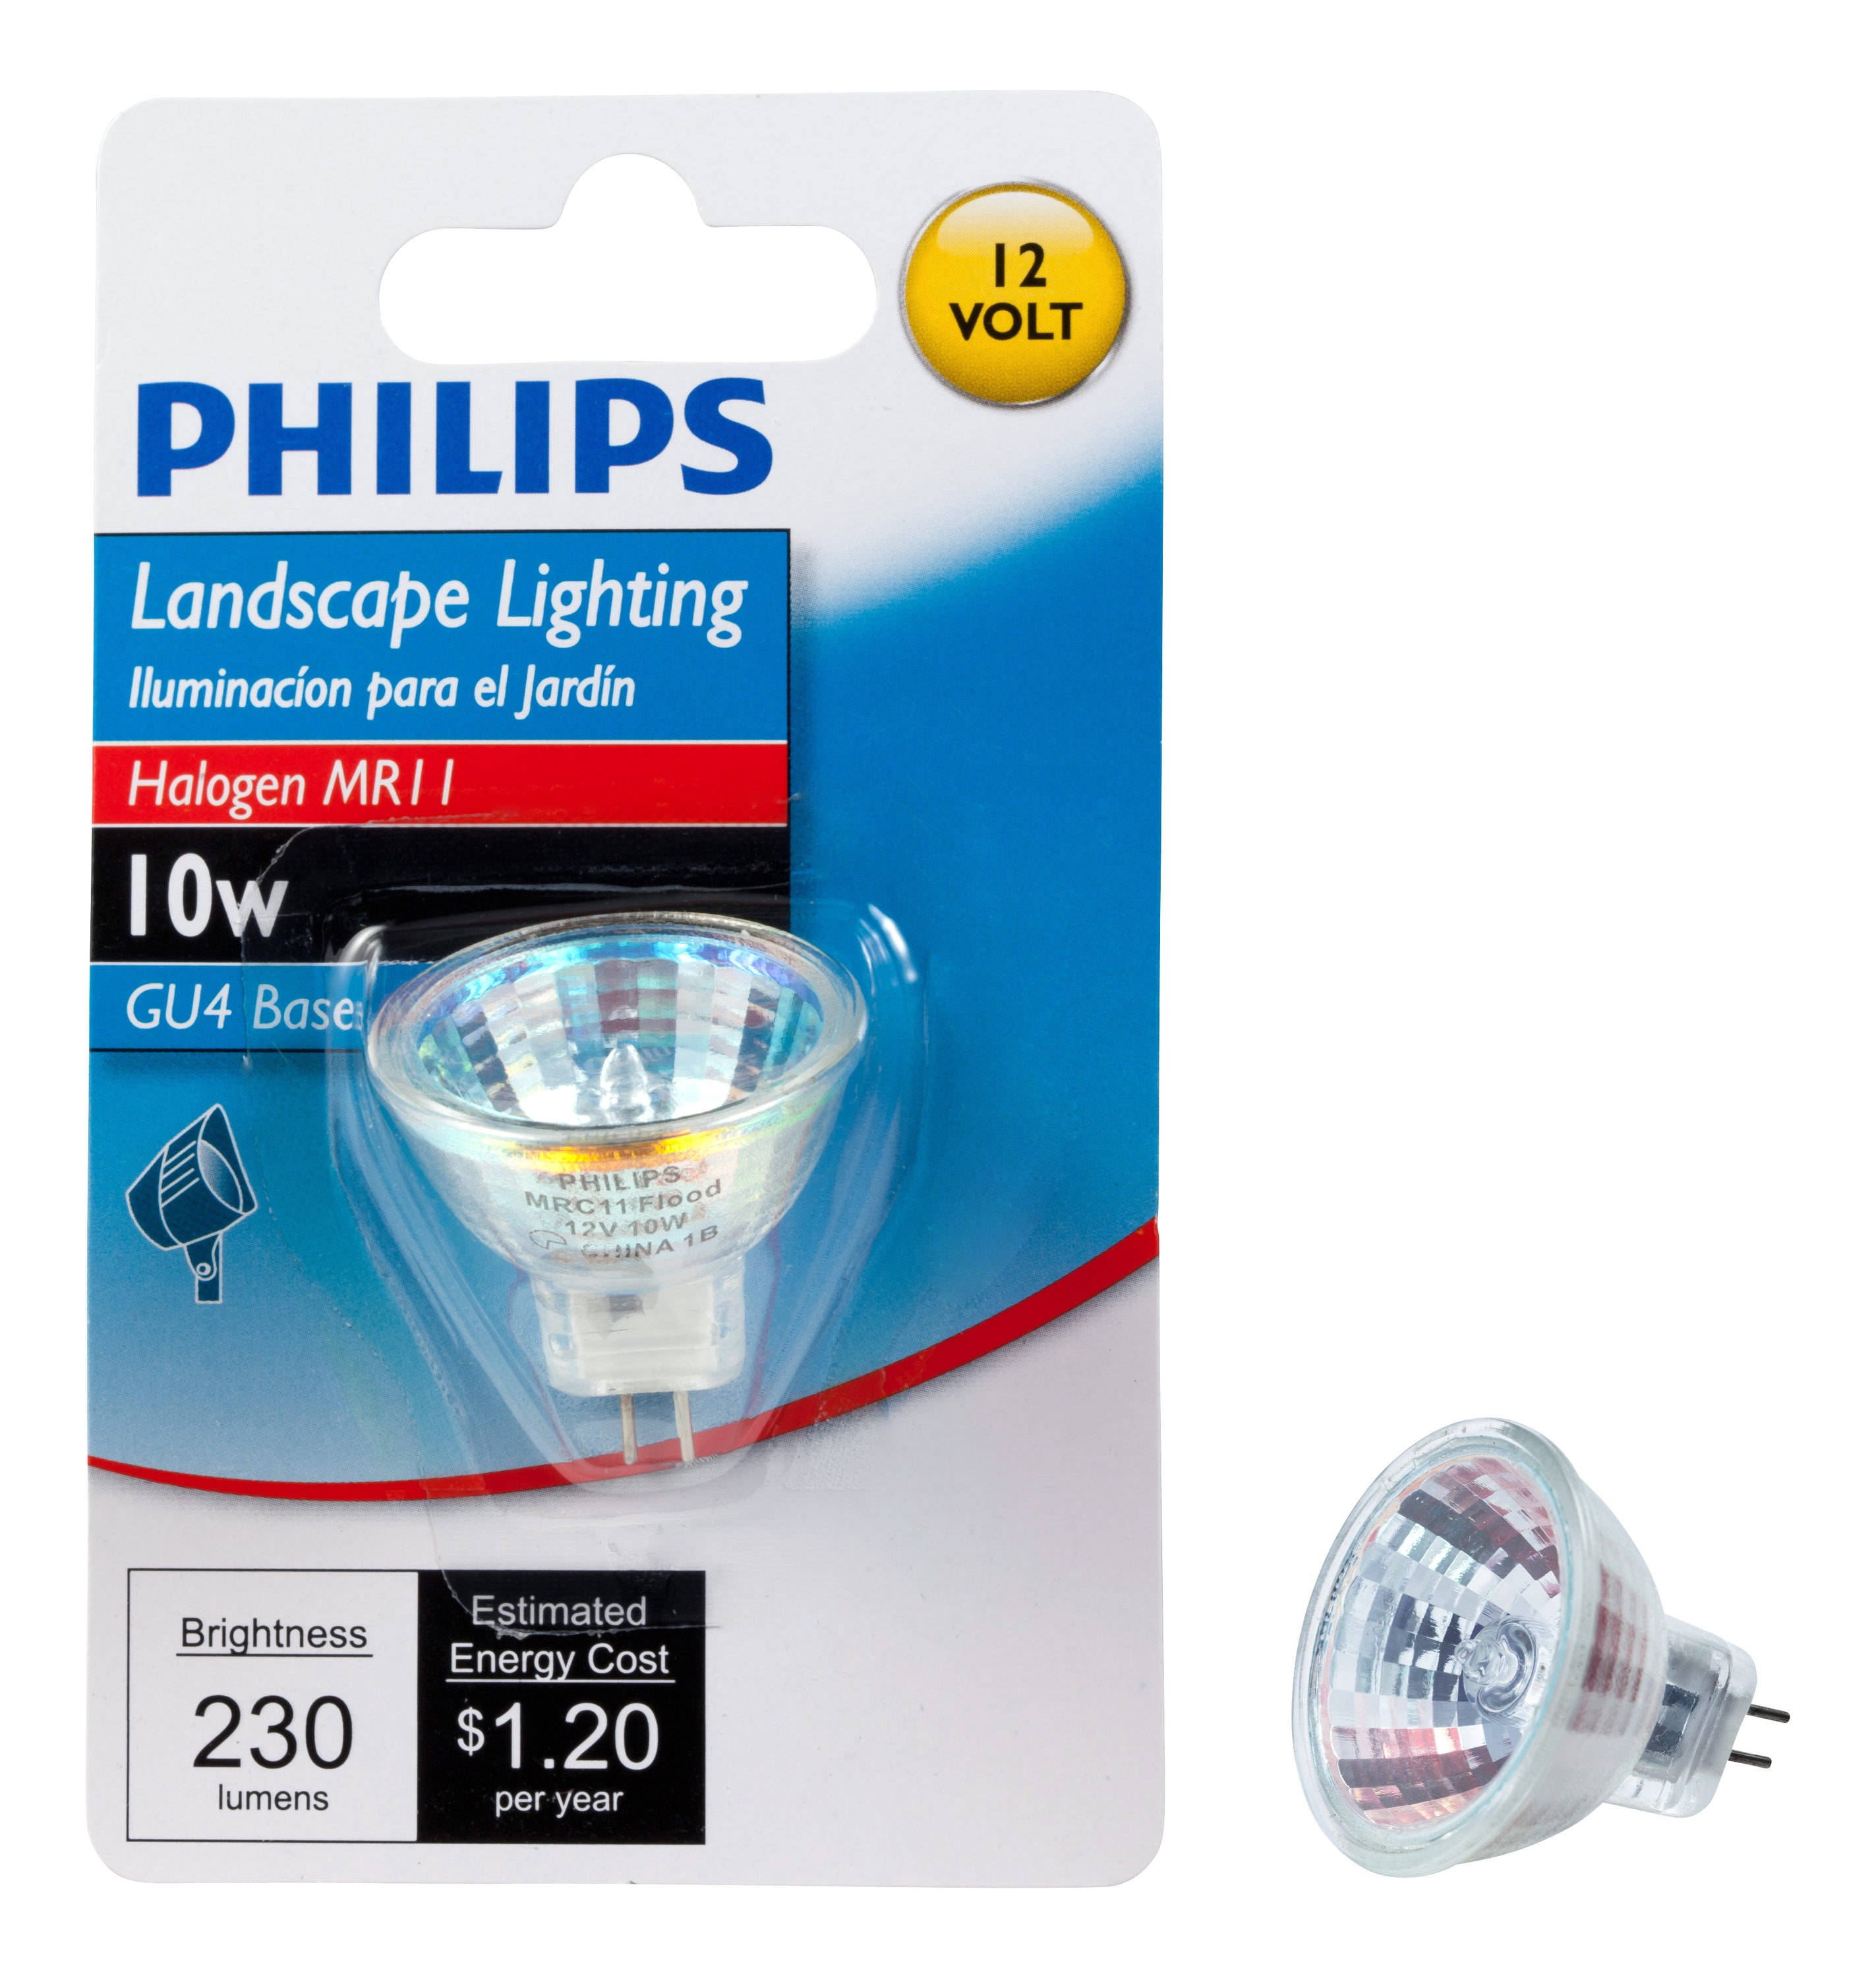 Philips Landscape Light Bulbs. Philips Bright Light.